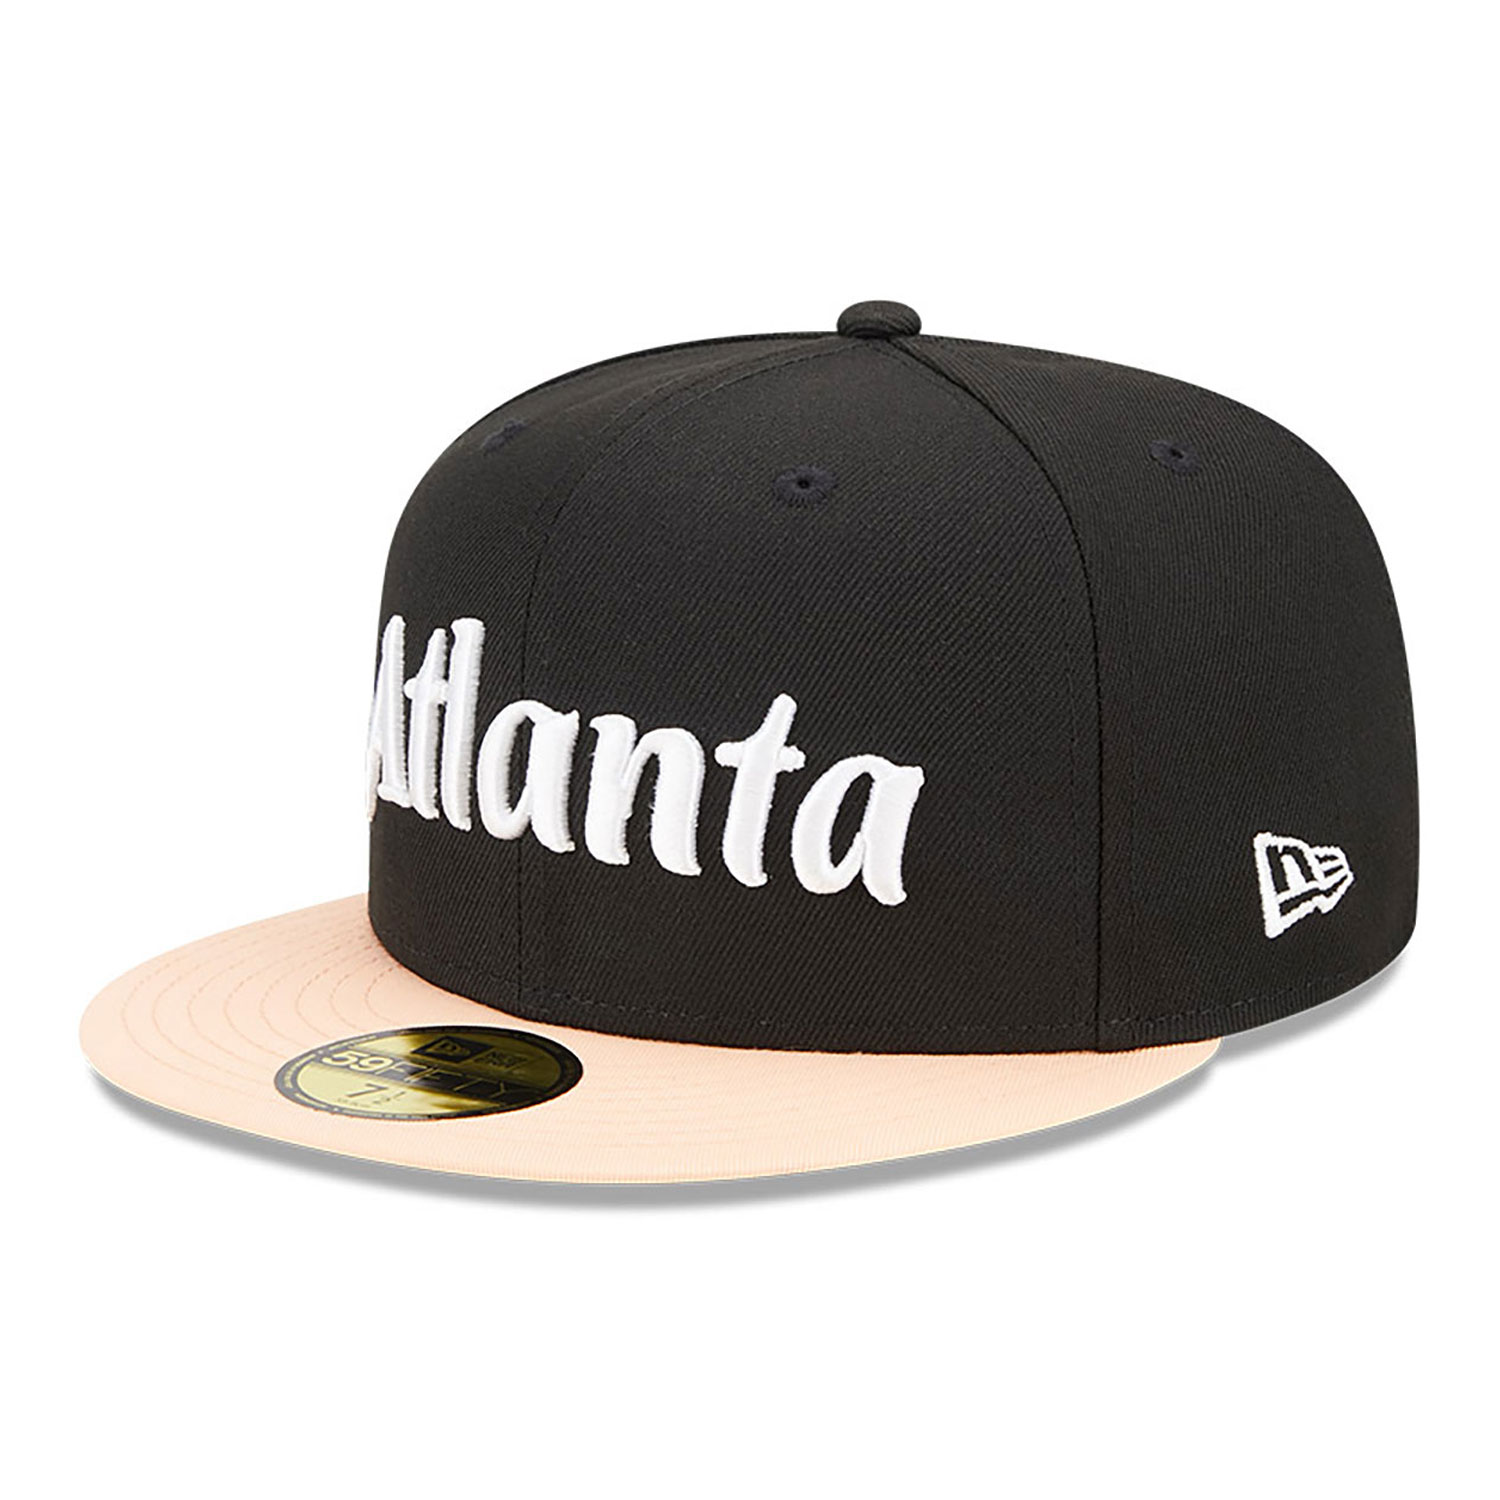 Atlanta Hawks Authentics City Edition Black 59FIFTY Fitted Cap